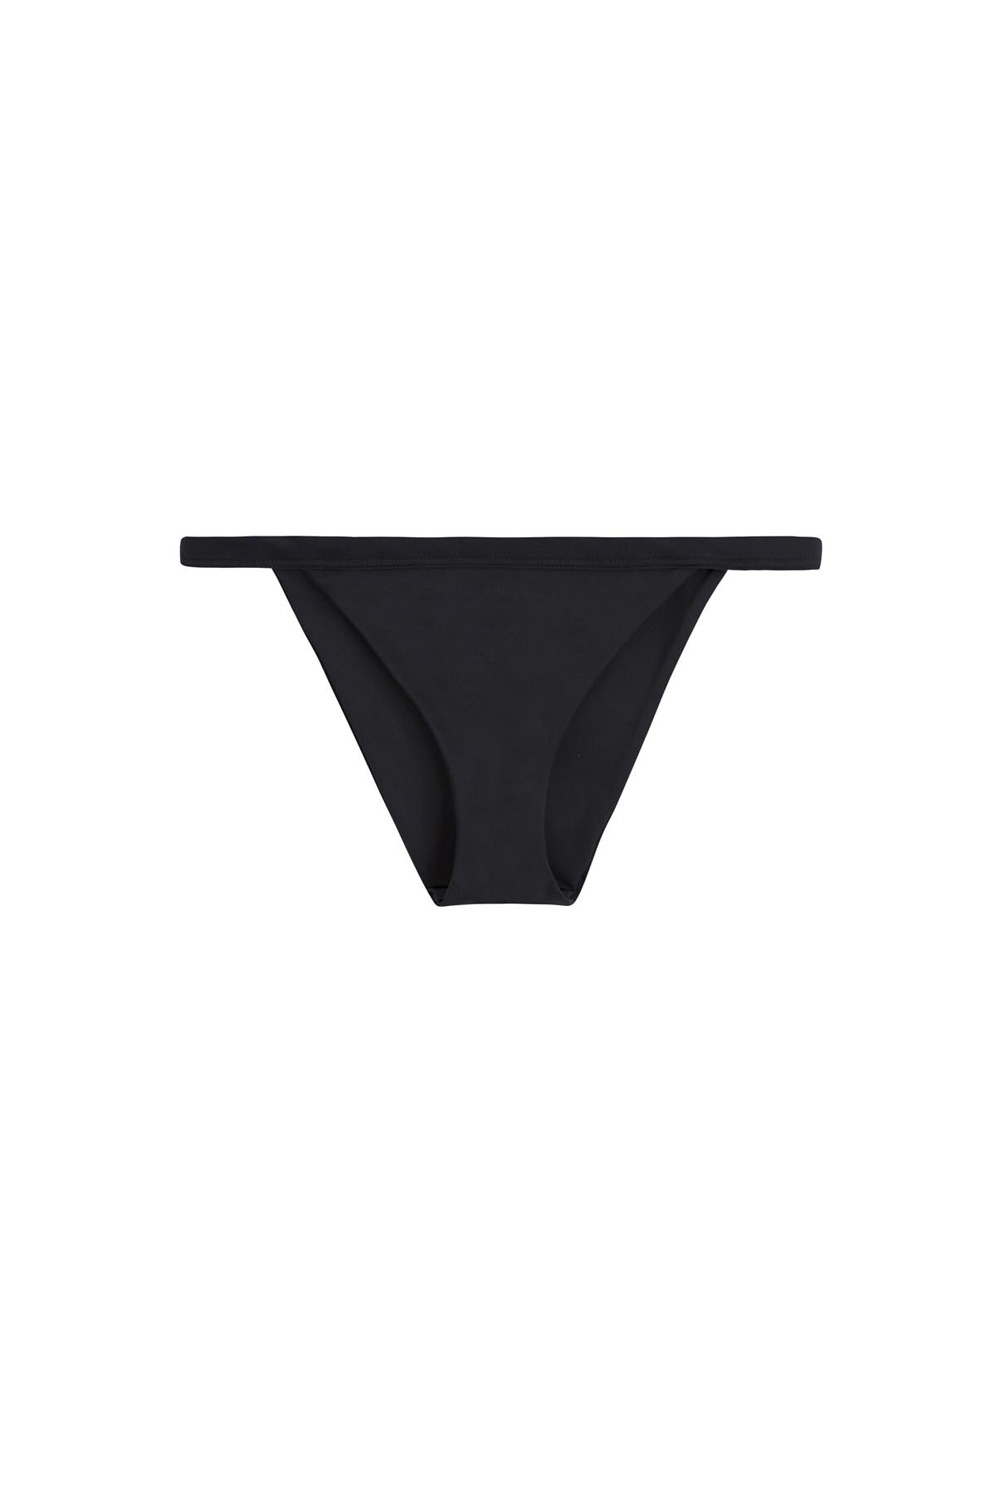 caicos bikini bottom by NOW_THEN. Handmade eco swimwear, regenerated econyl nylon, toxics free swimwear, ropa de baño ecológica, ethically made in Spain